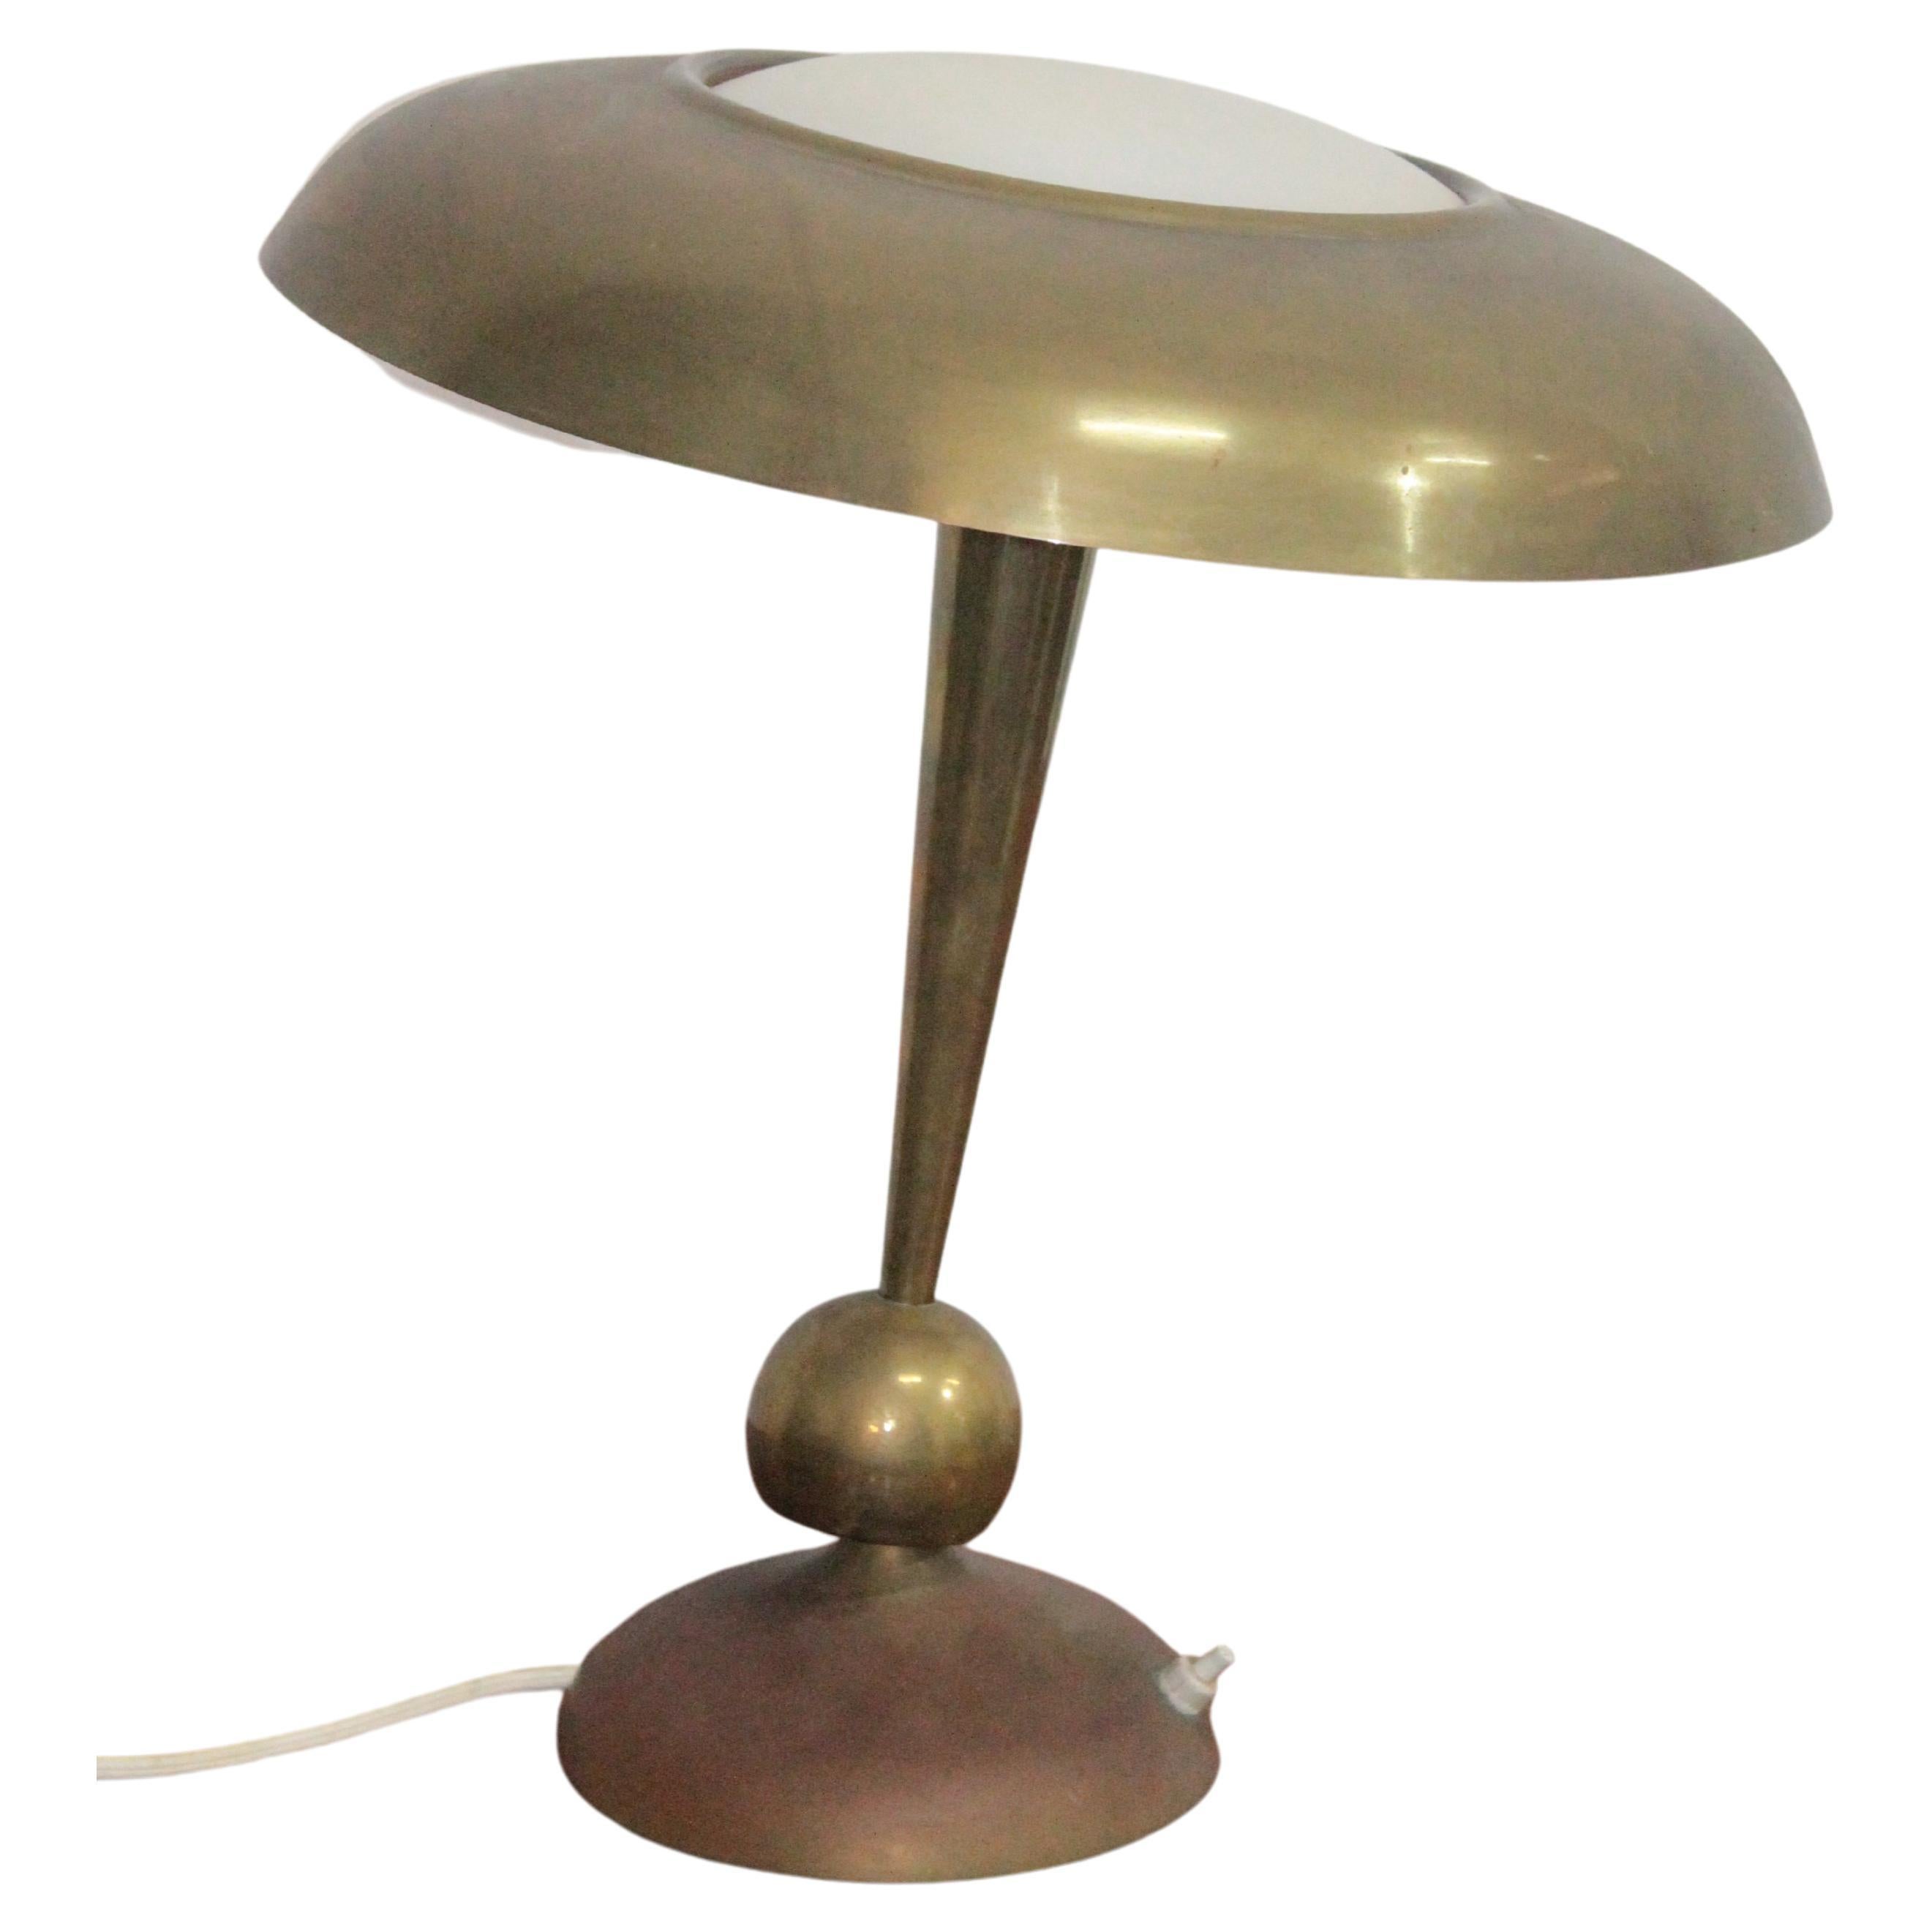 Midcentury Table Lamp By Oscar Torlasco for Lumi 1950s Mod. 143